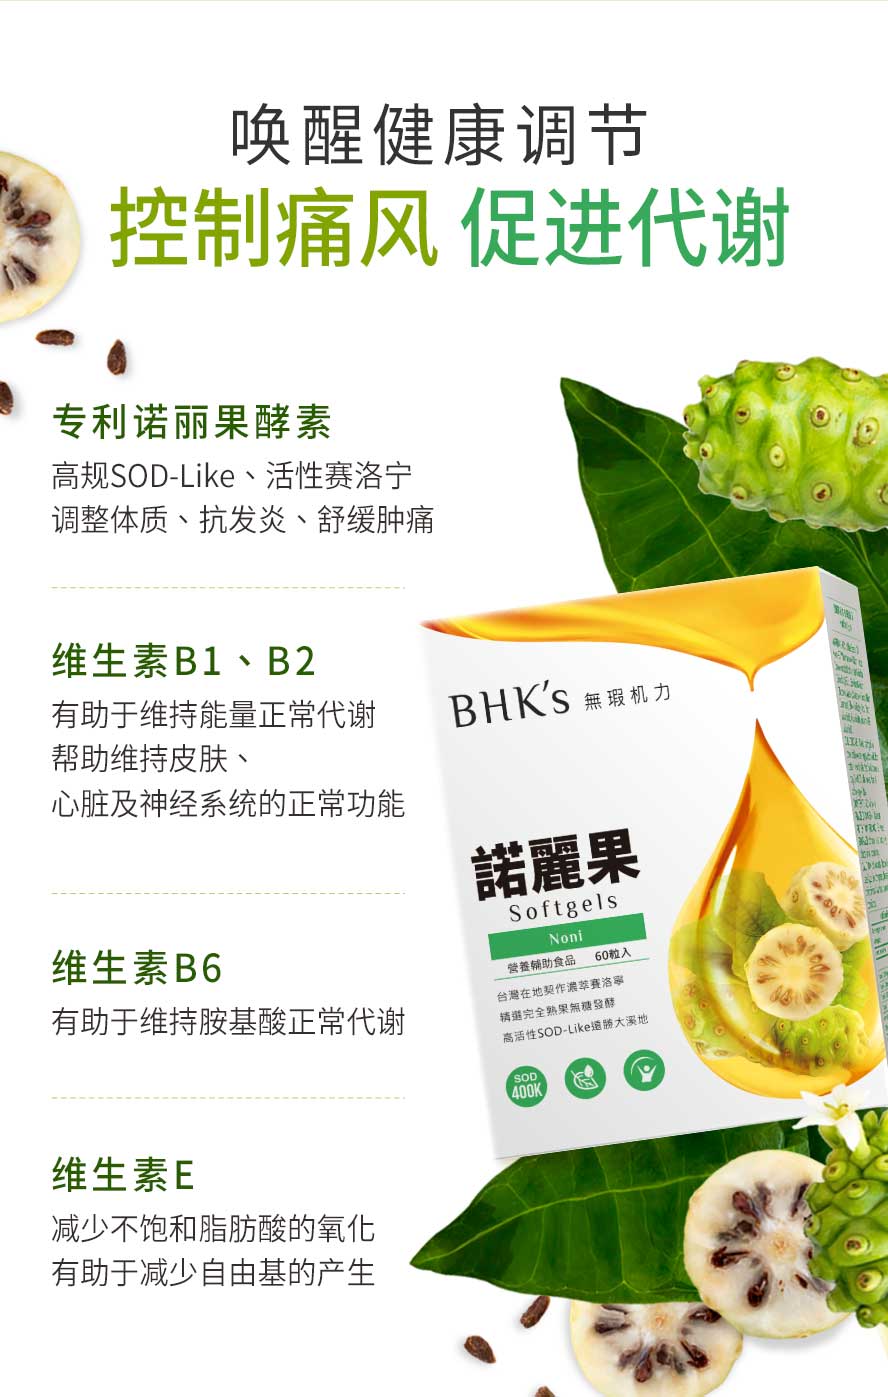 BHK's诺丽果含丰富SOD-Like与活性赛洛宁，能瓦解关节尿酸结晶、免疫力提升，添加维生素B1、B2、B6、E，维持胺基酸正常代谢、维持健康。